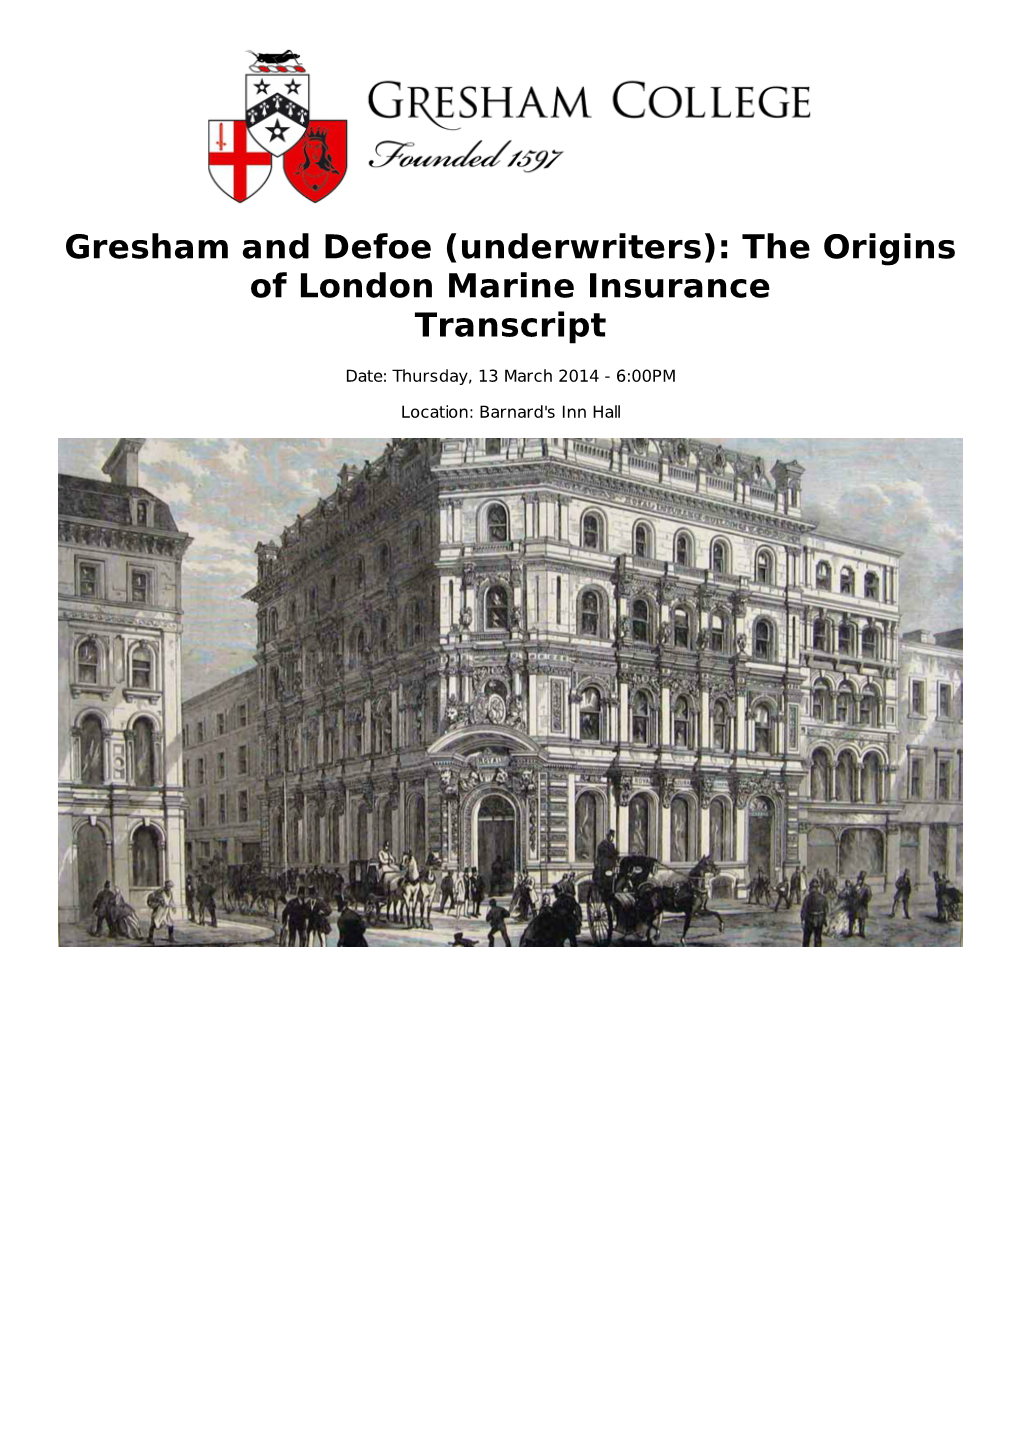 (Underwriters): the Origins of London Marine Insurance Transcript